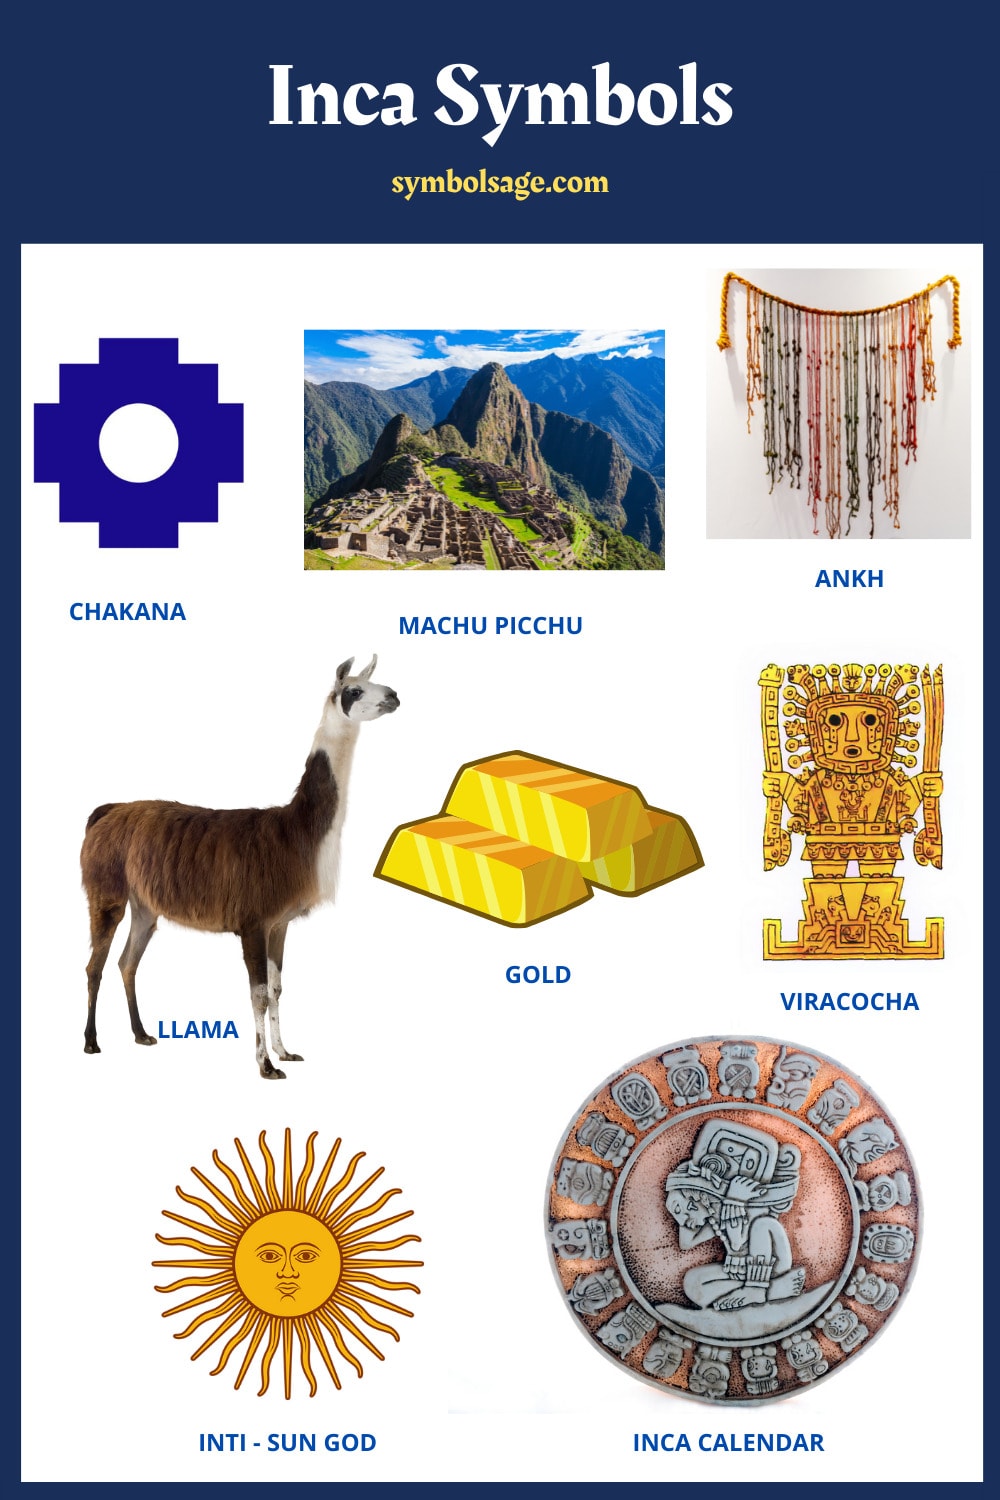 List of Inca symbols